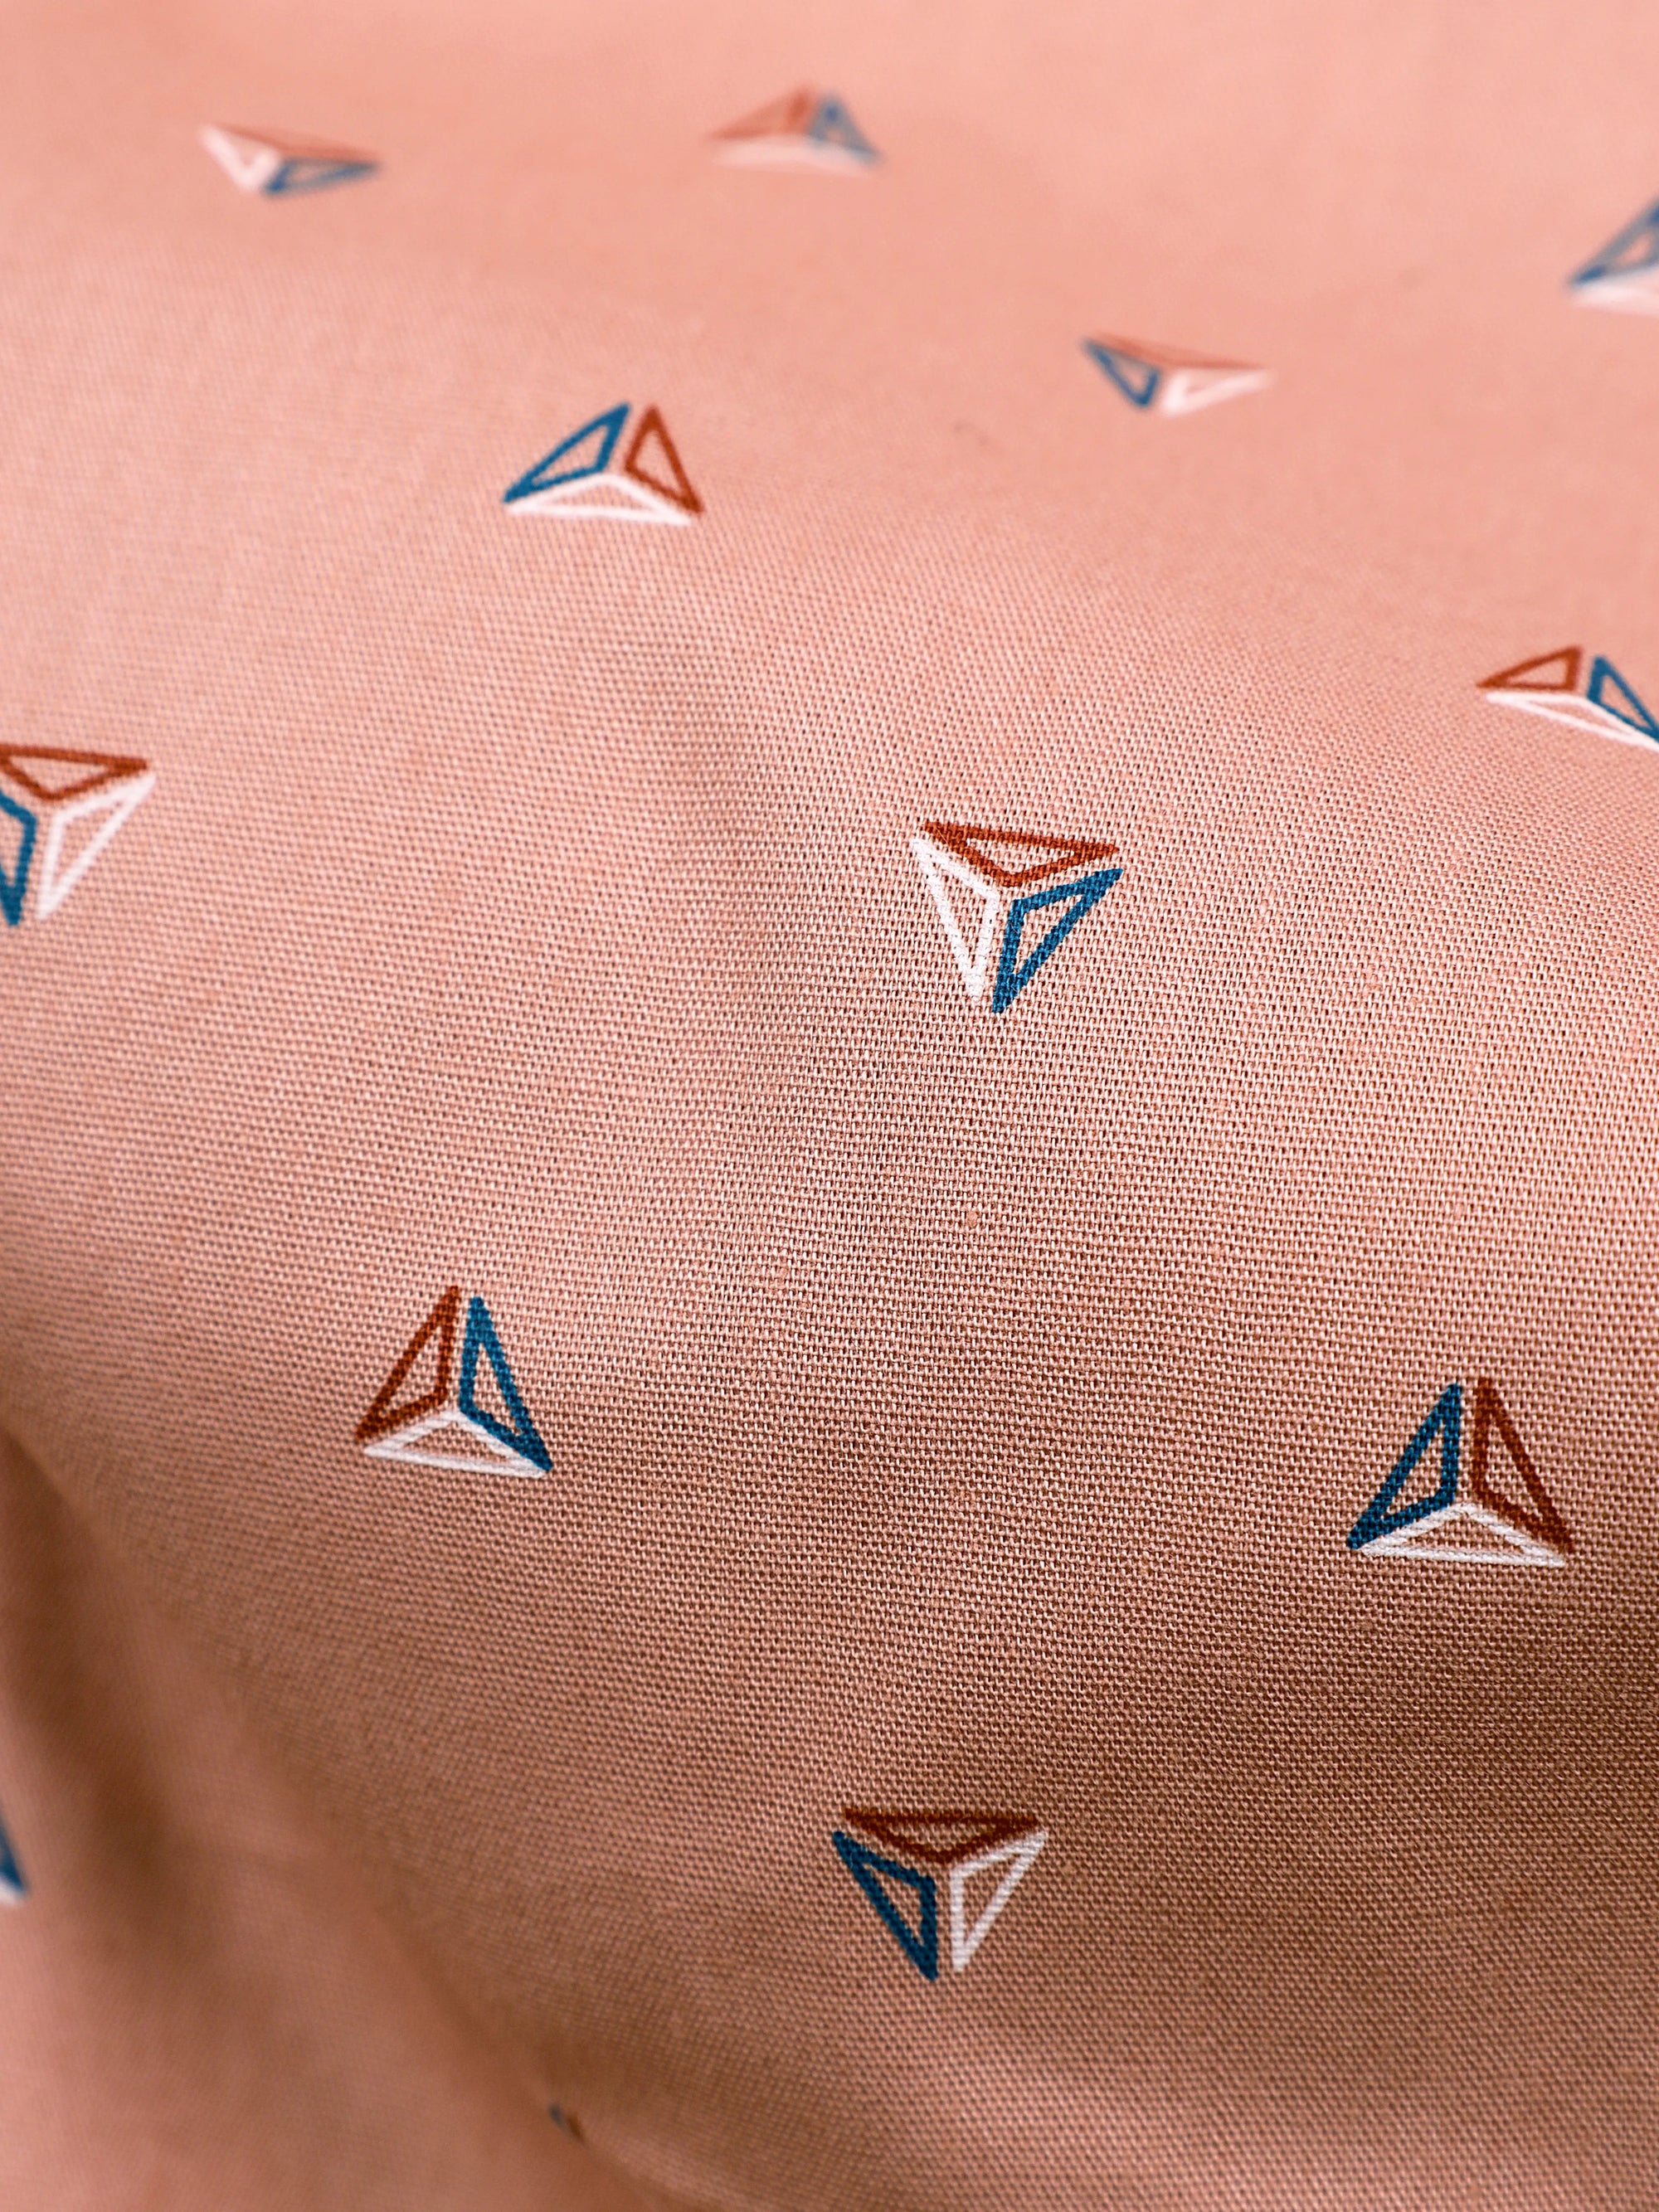 Hemlock Orange Triangle-3D Printed  Soft Premium Cotton Shirt